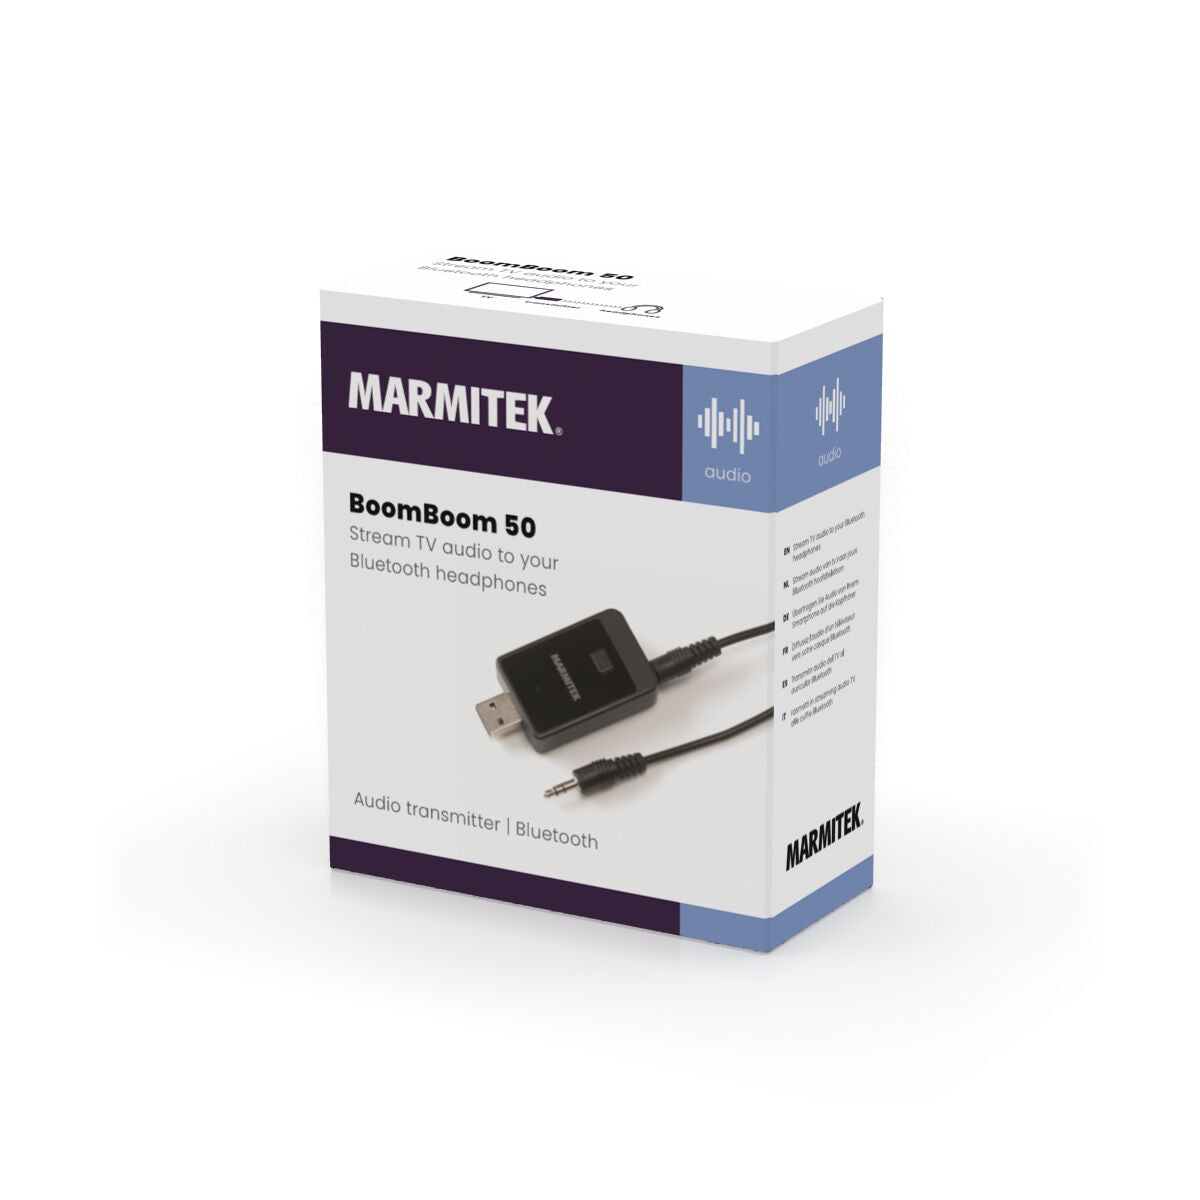 BoomBoom 50 - Bluetooth Transmitter TV - 3D Packshot Image | Marmitek